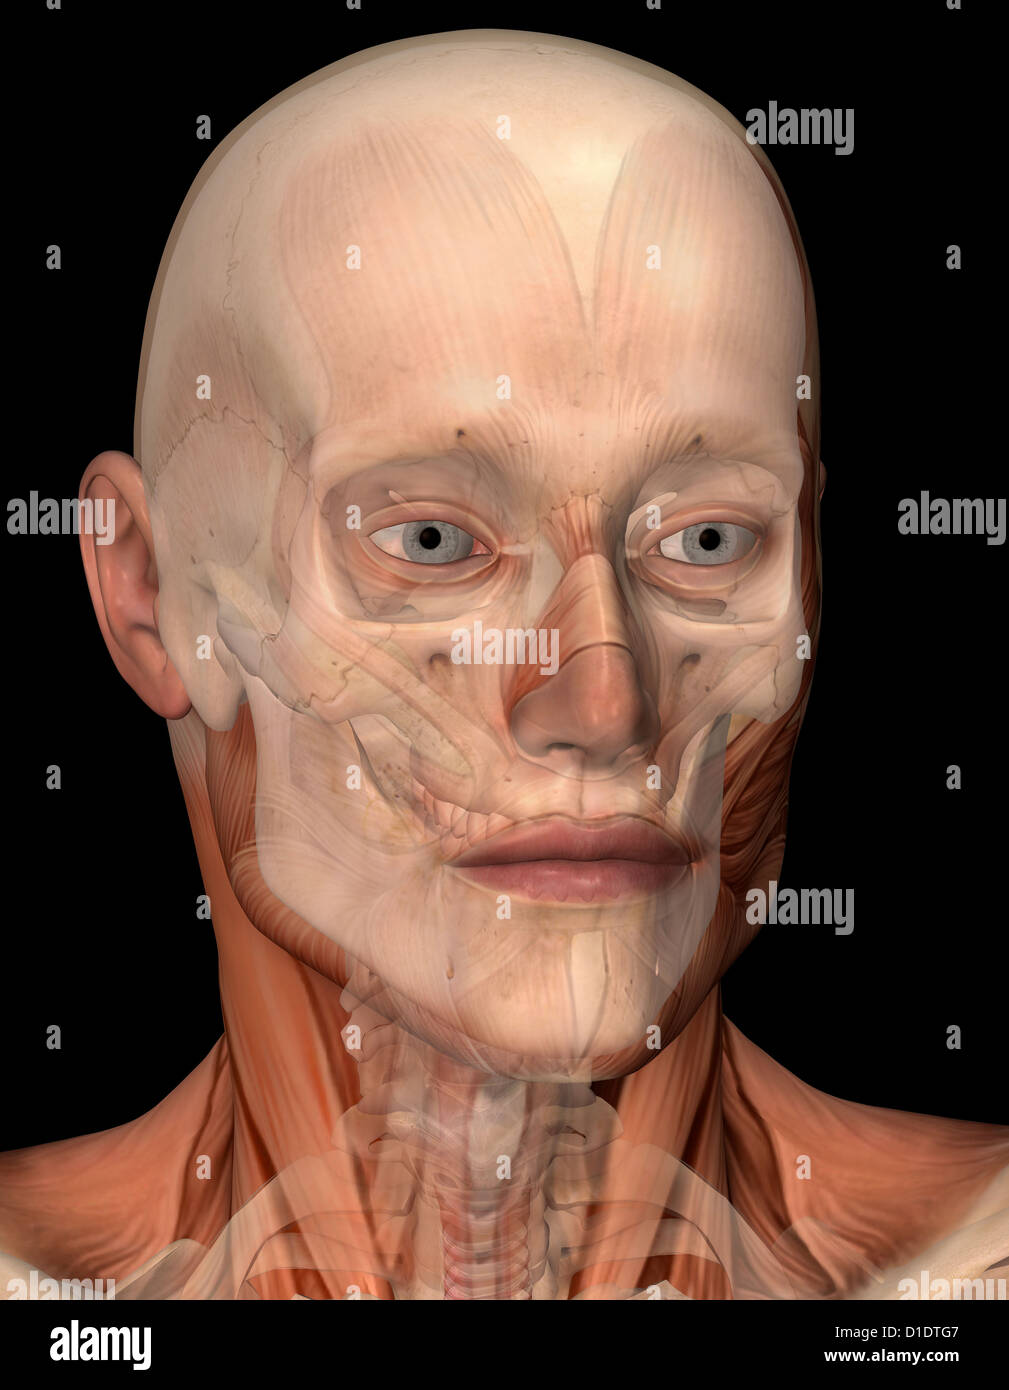 human head anatomy showing the brain within the skull Stock Photo